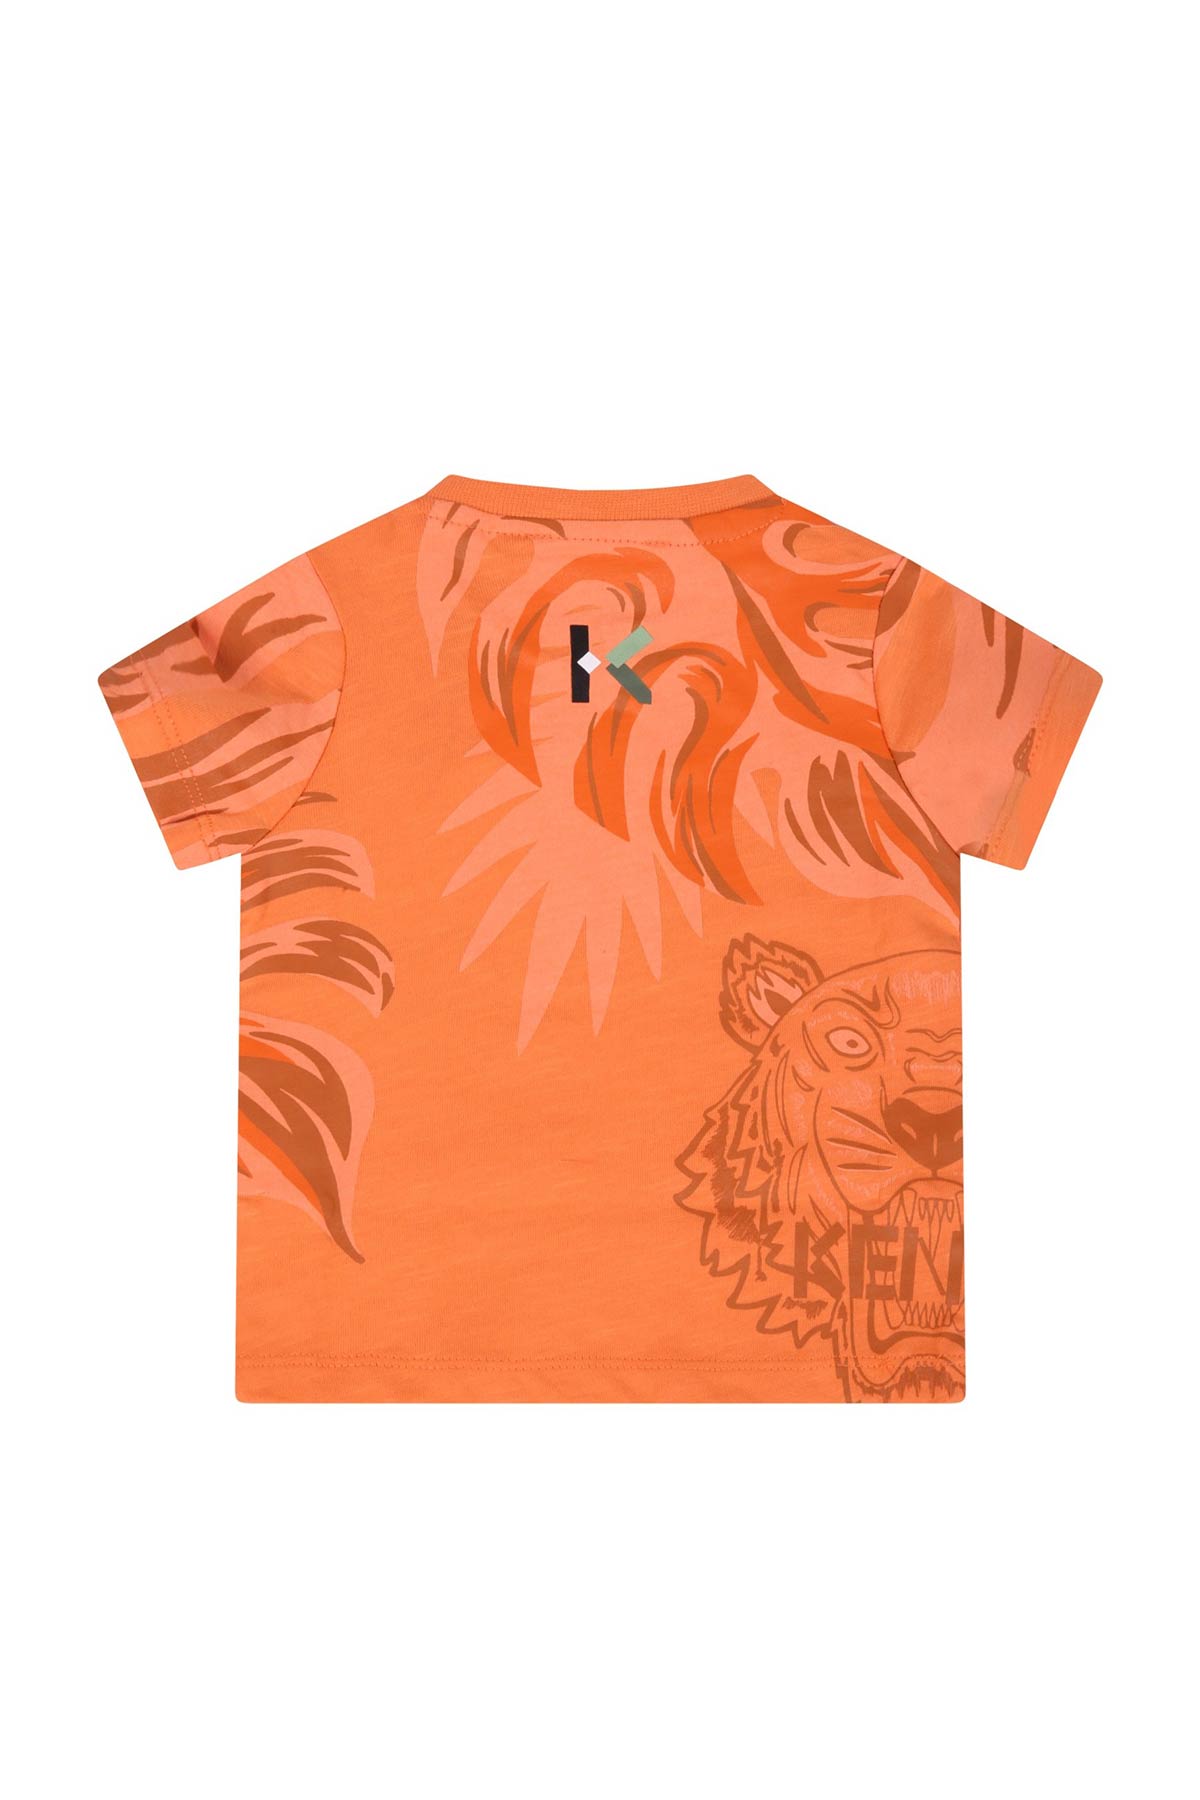 Kenzo Kids 12 Ay Erkek Bebek Renkli Logolu T-shirt-Libas Trendy Fashion Store